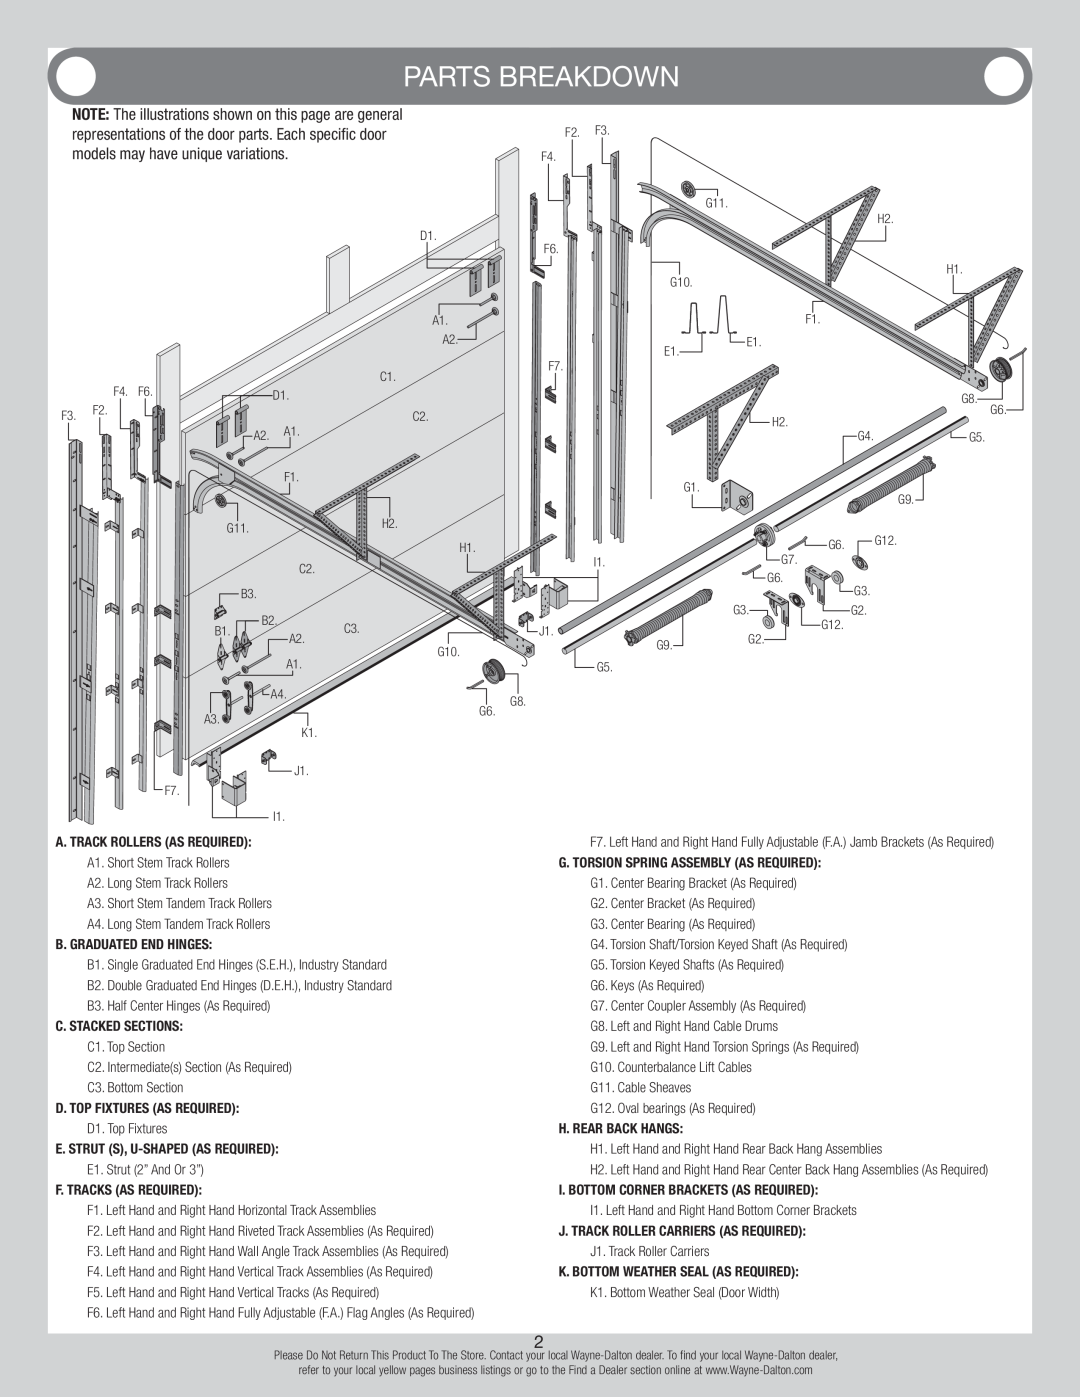 Wayne-Dalton 310/311, 105/110 installation instructions Parts Breakdown 